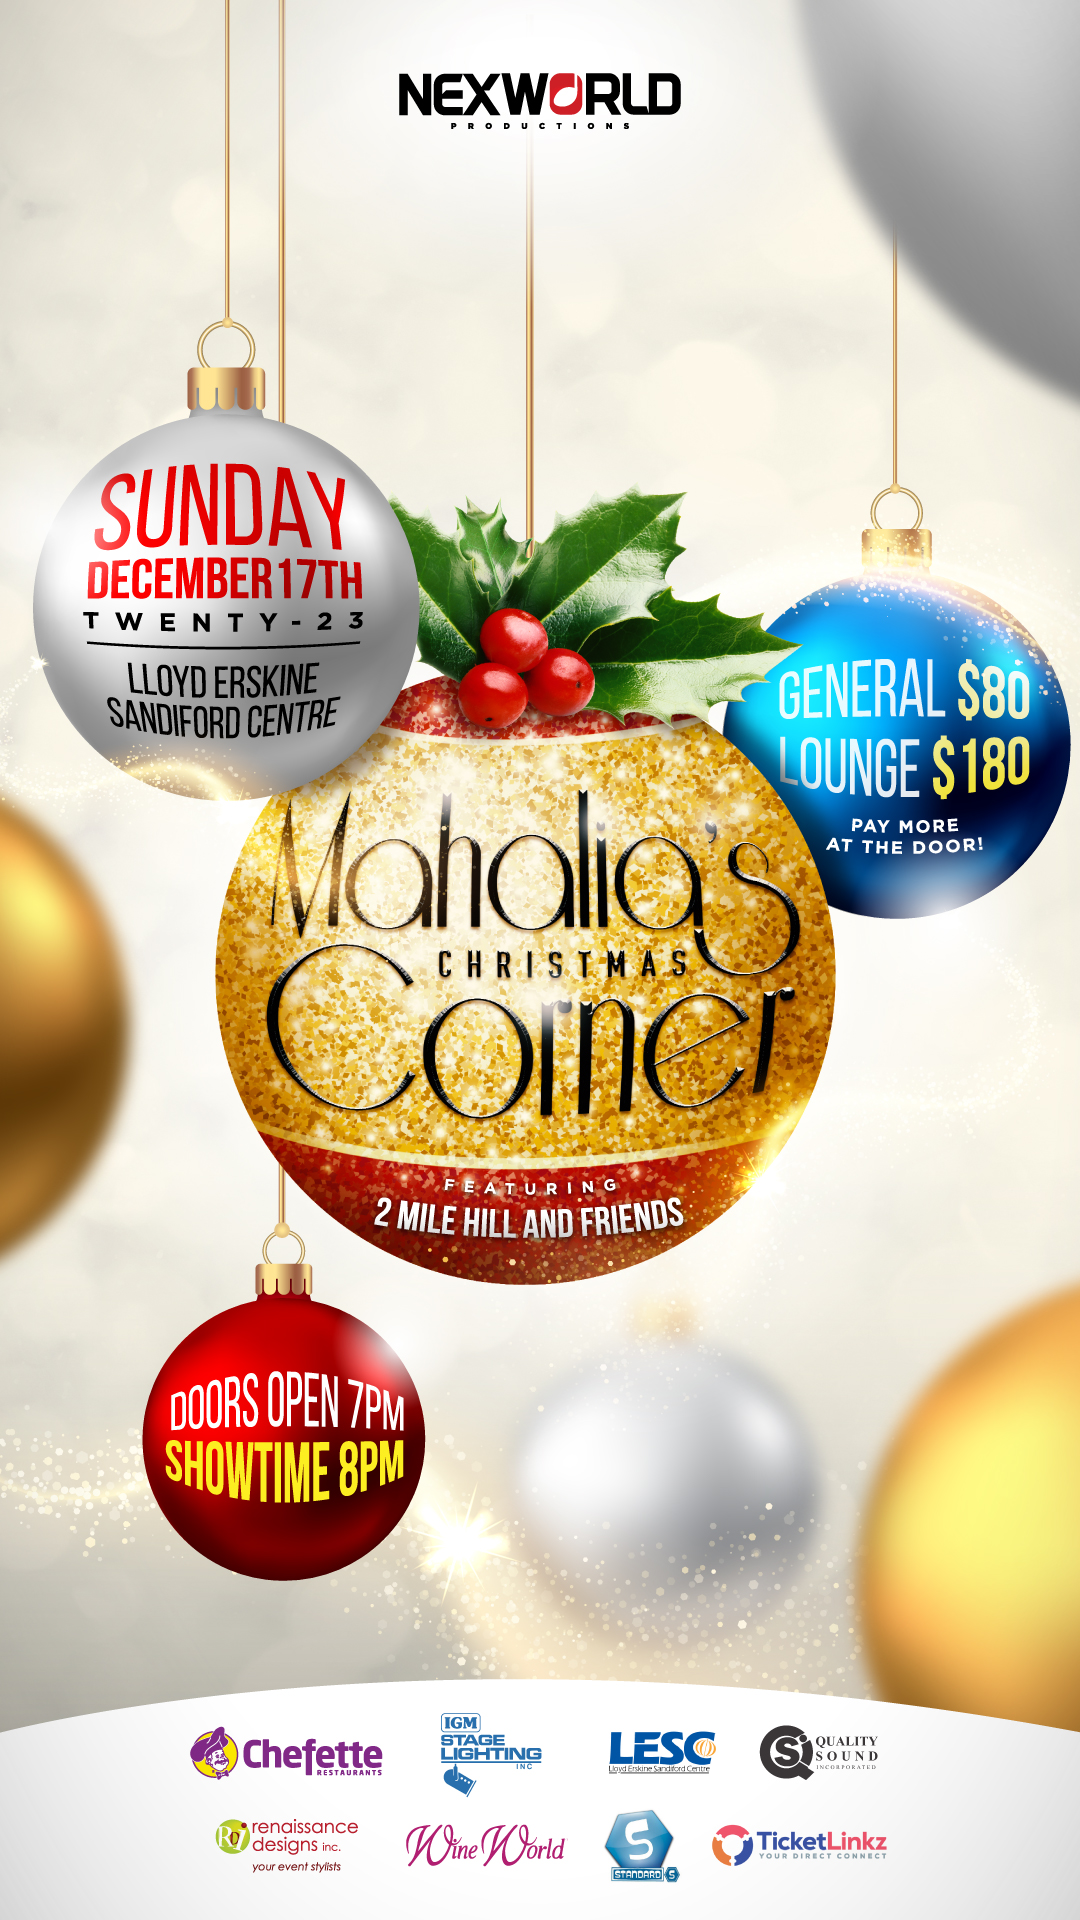 Mahalia's Christmas Corner presents 2 Mile Hill and Friends